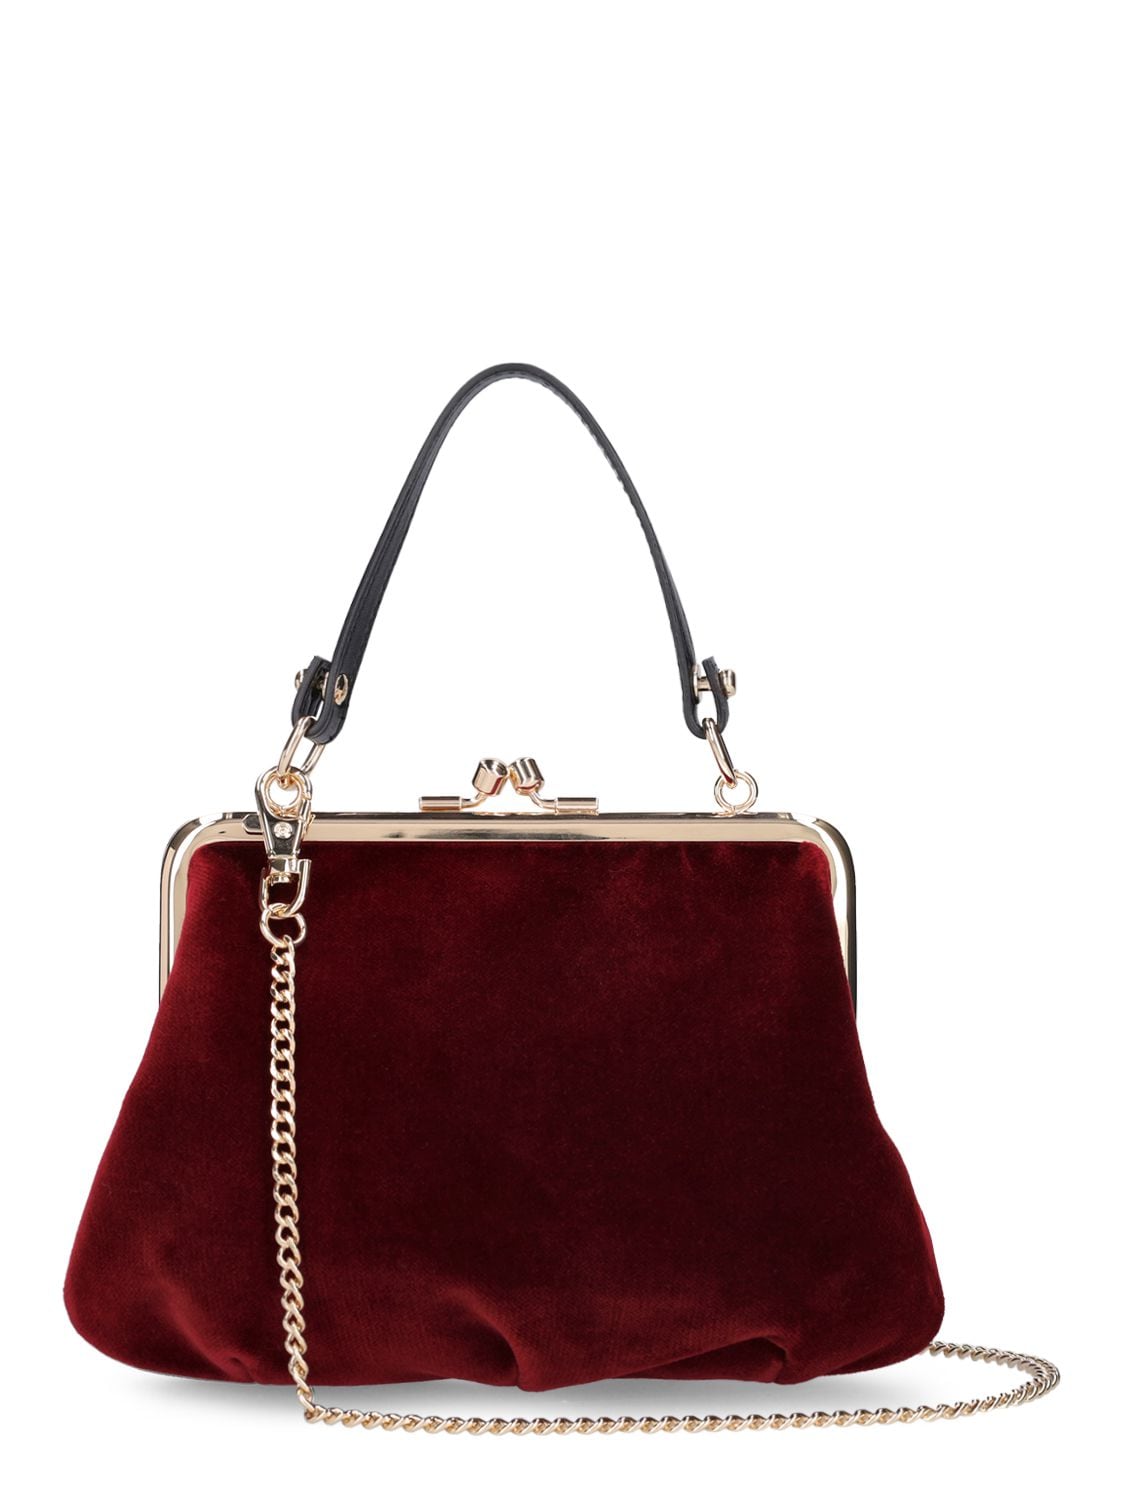 Vivienne Westwood Women's Clutch Bags - Red